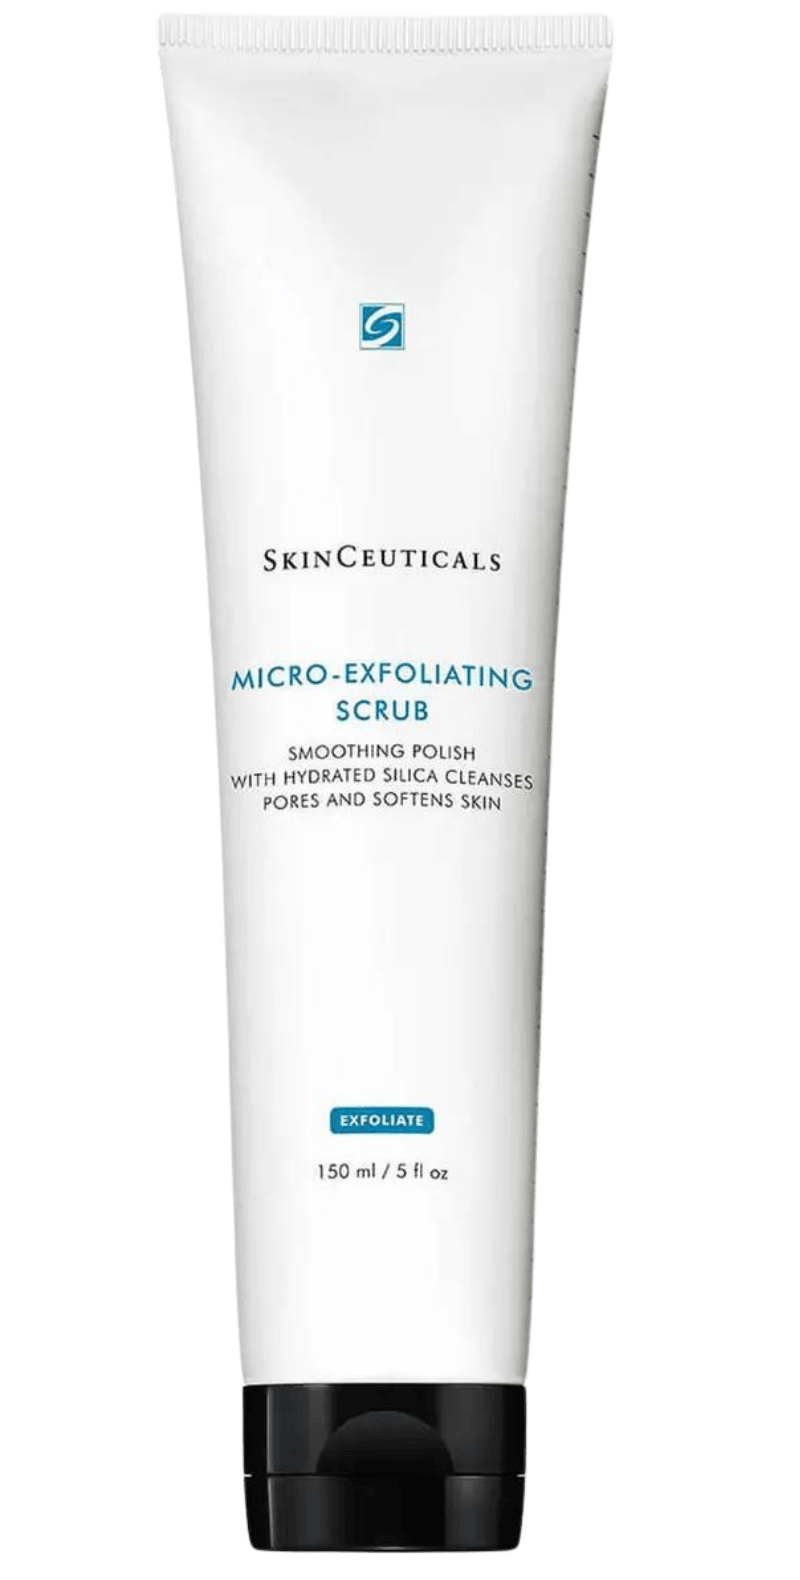 's SkinCeuticals Micro-Exfoliating Scrub - Bellini's Skin and Parfumerie 